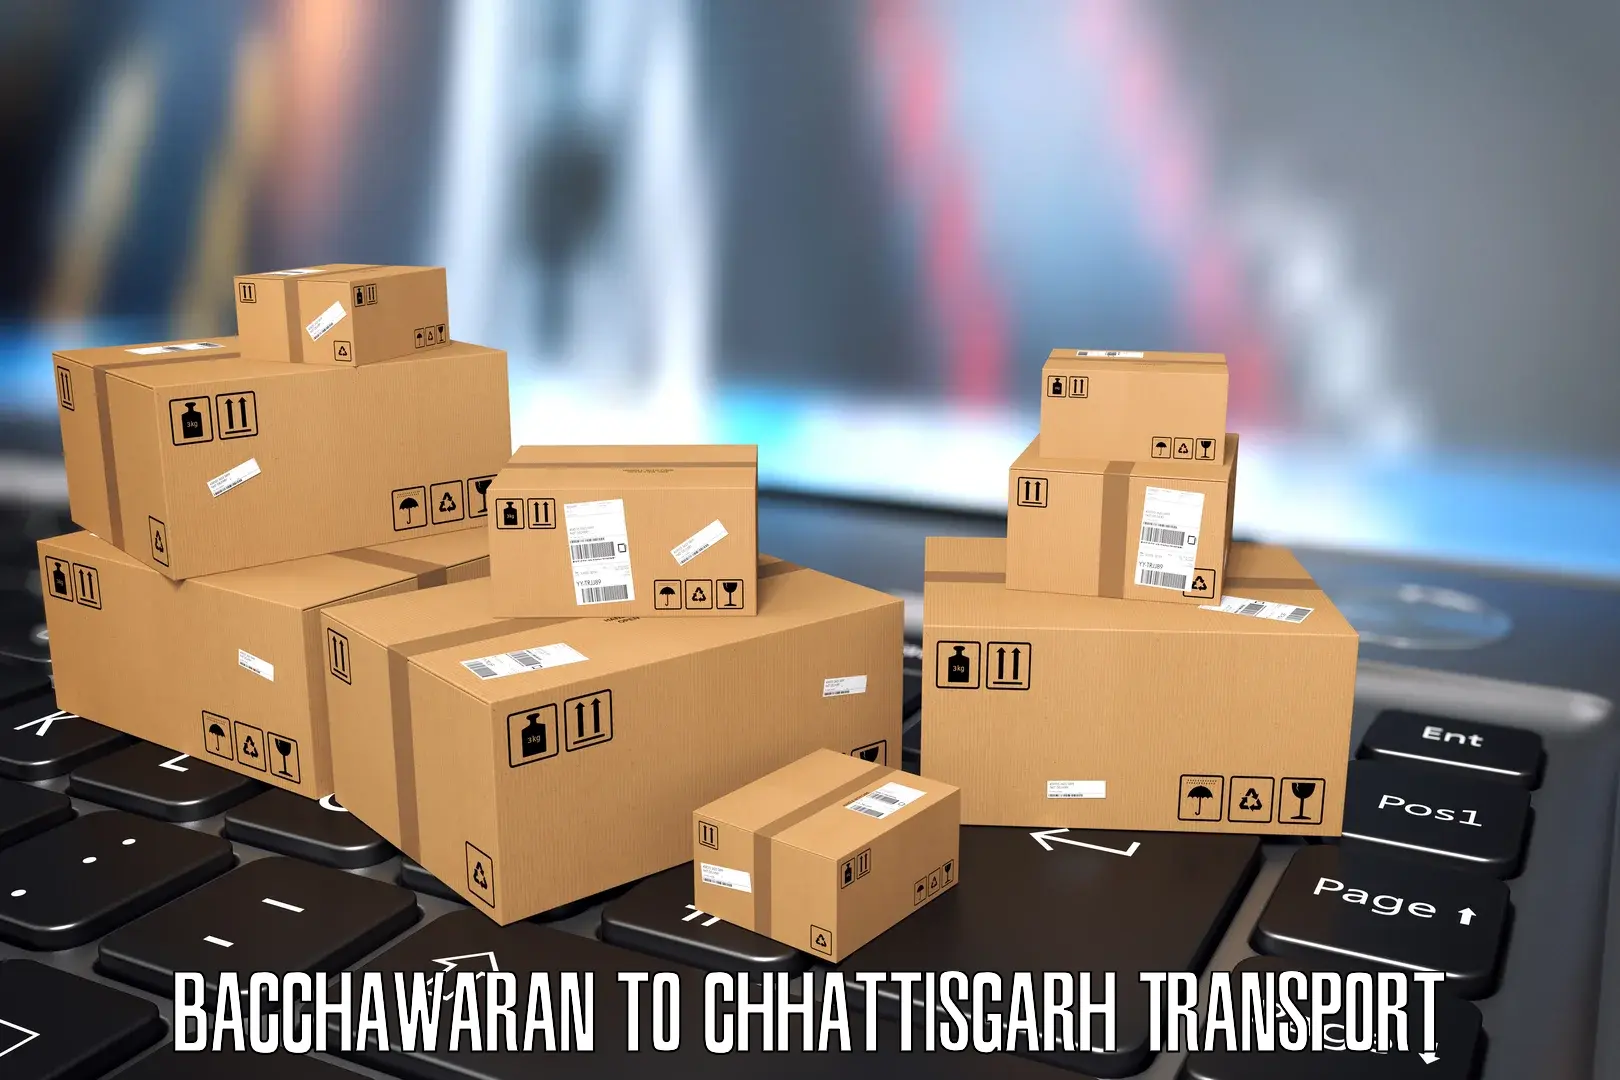 Furniture transport service Bacchawaran to Berla